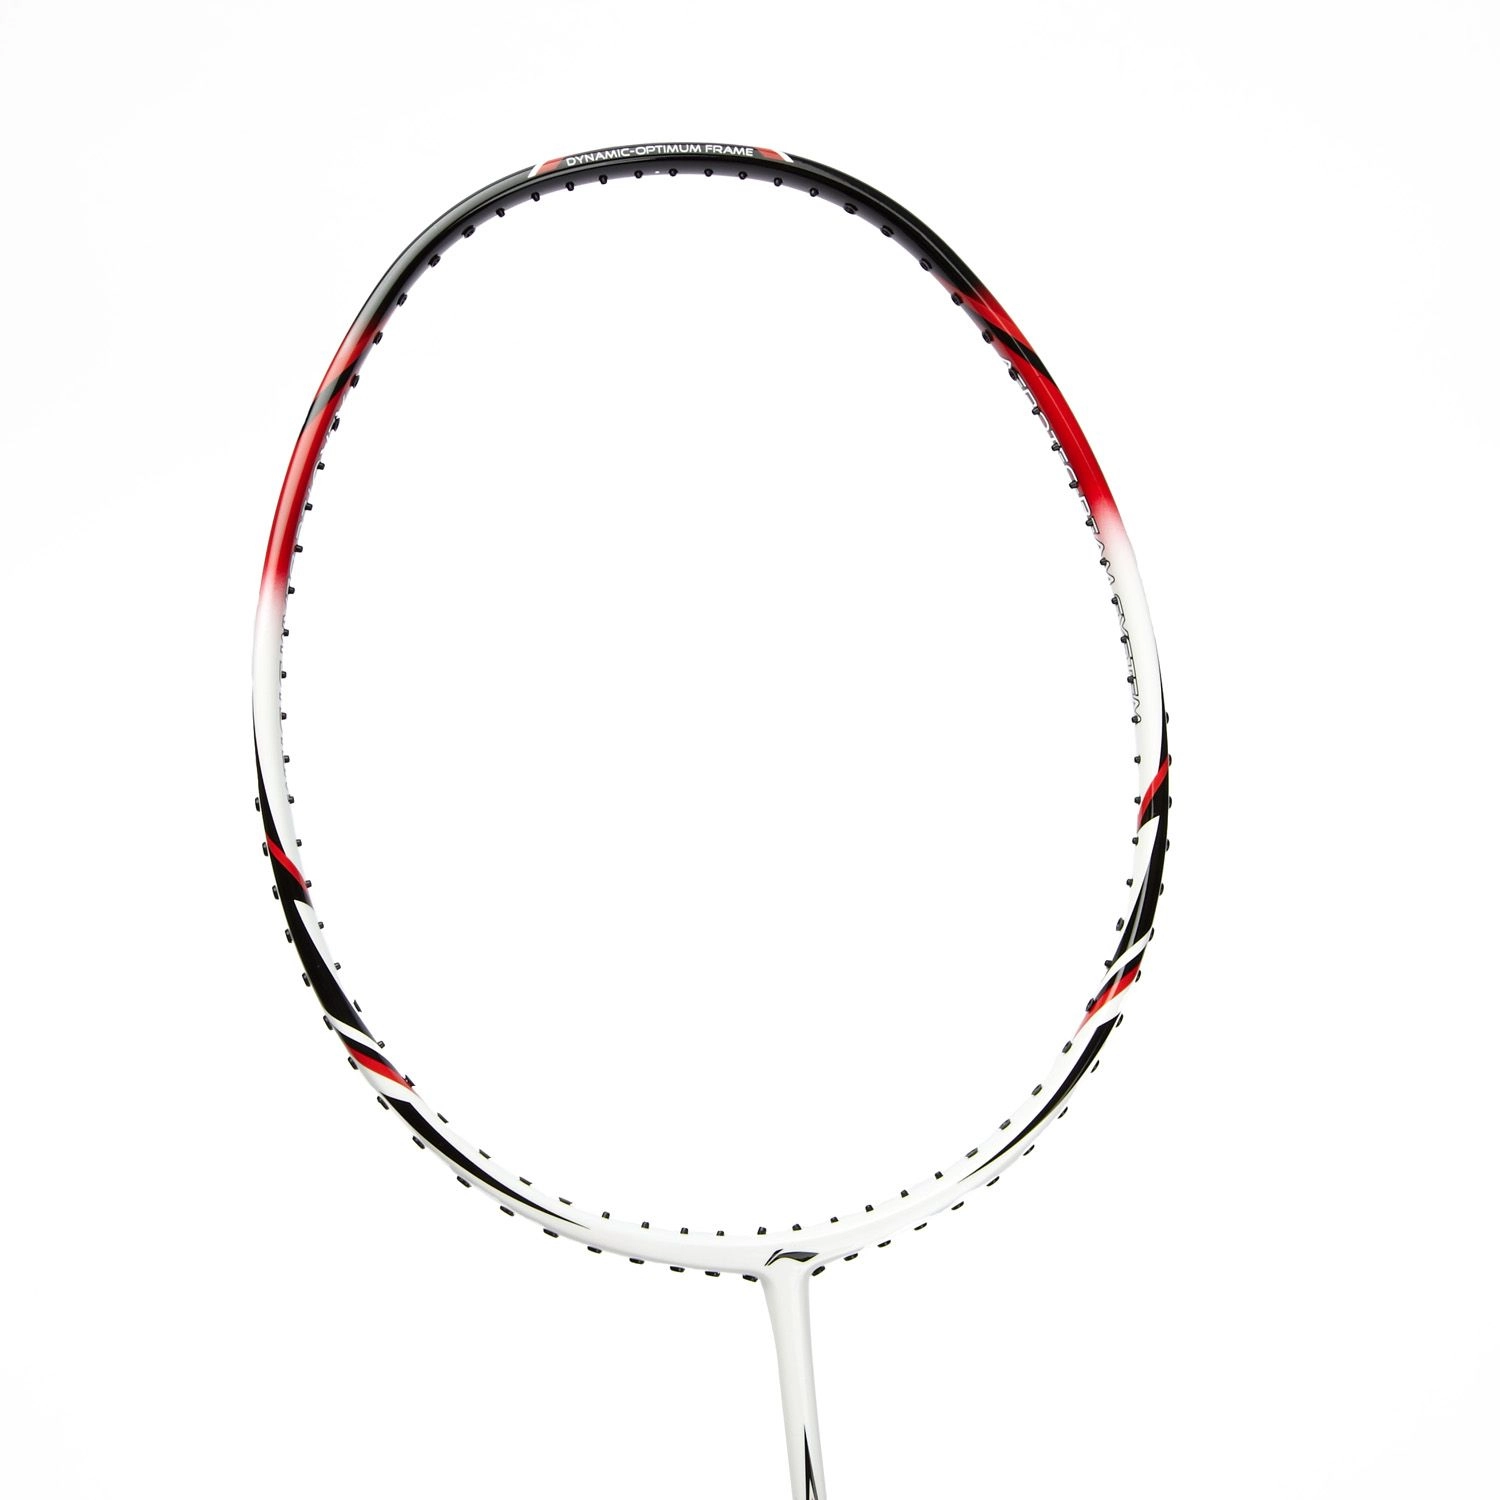 Li-Ning Carbon Graphite A800 Badminton Racket 